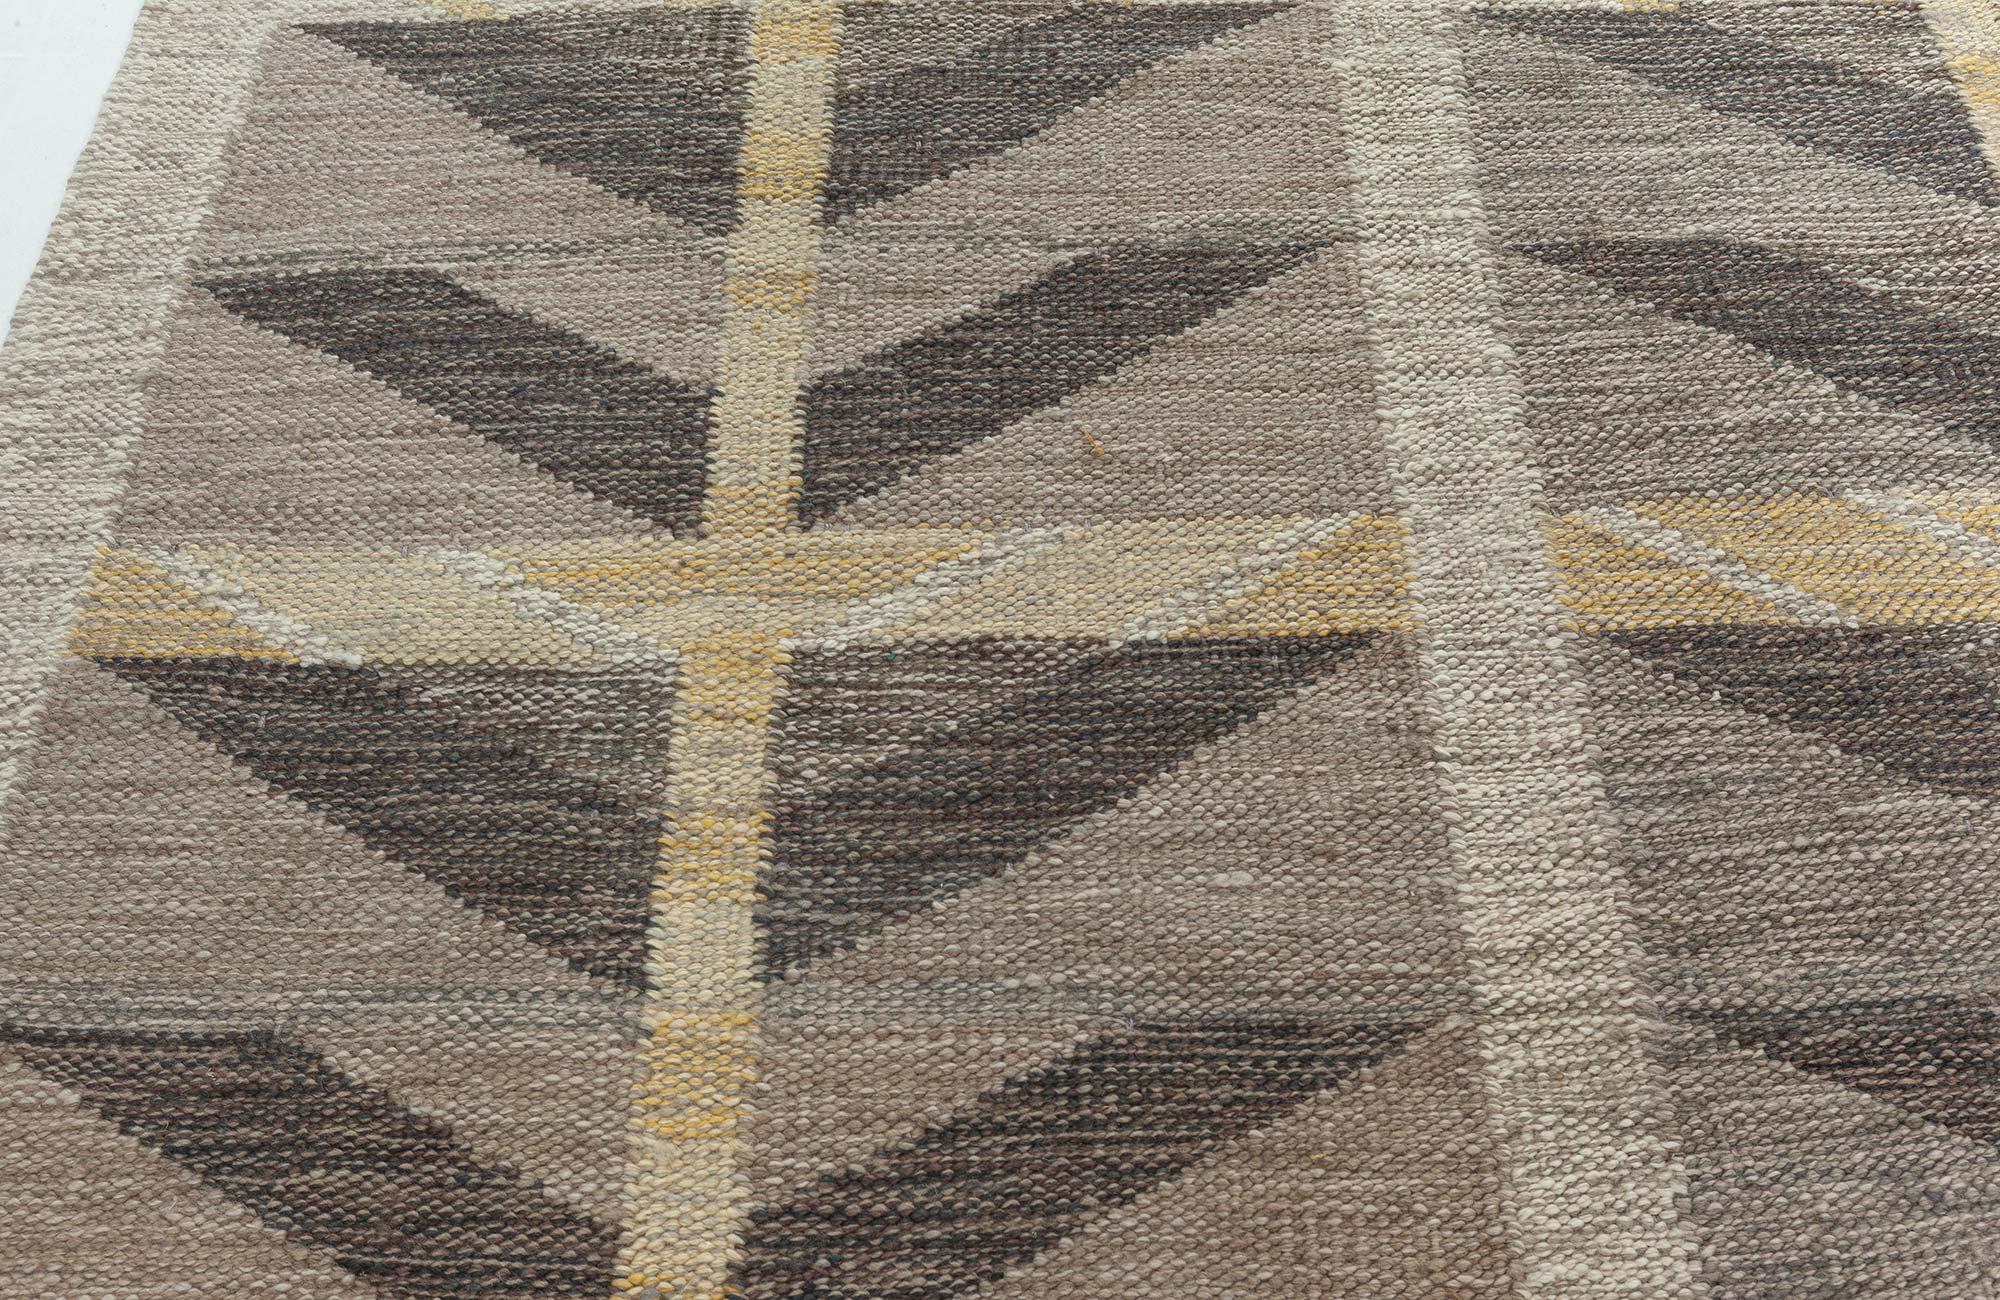 Contemporary Swedish Flat Weave Rug by Doris Leslie Blau
Size: 11'9